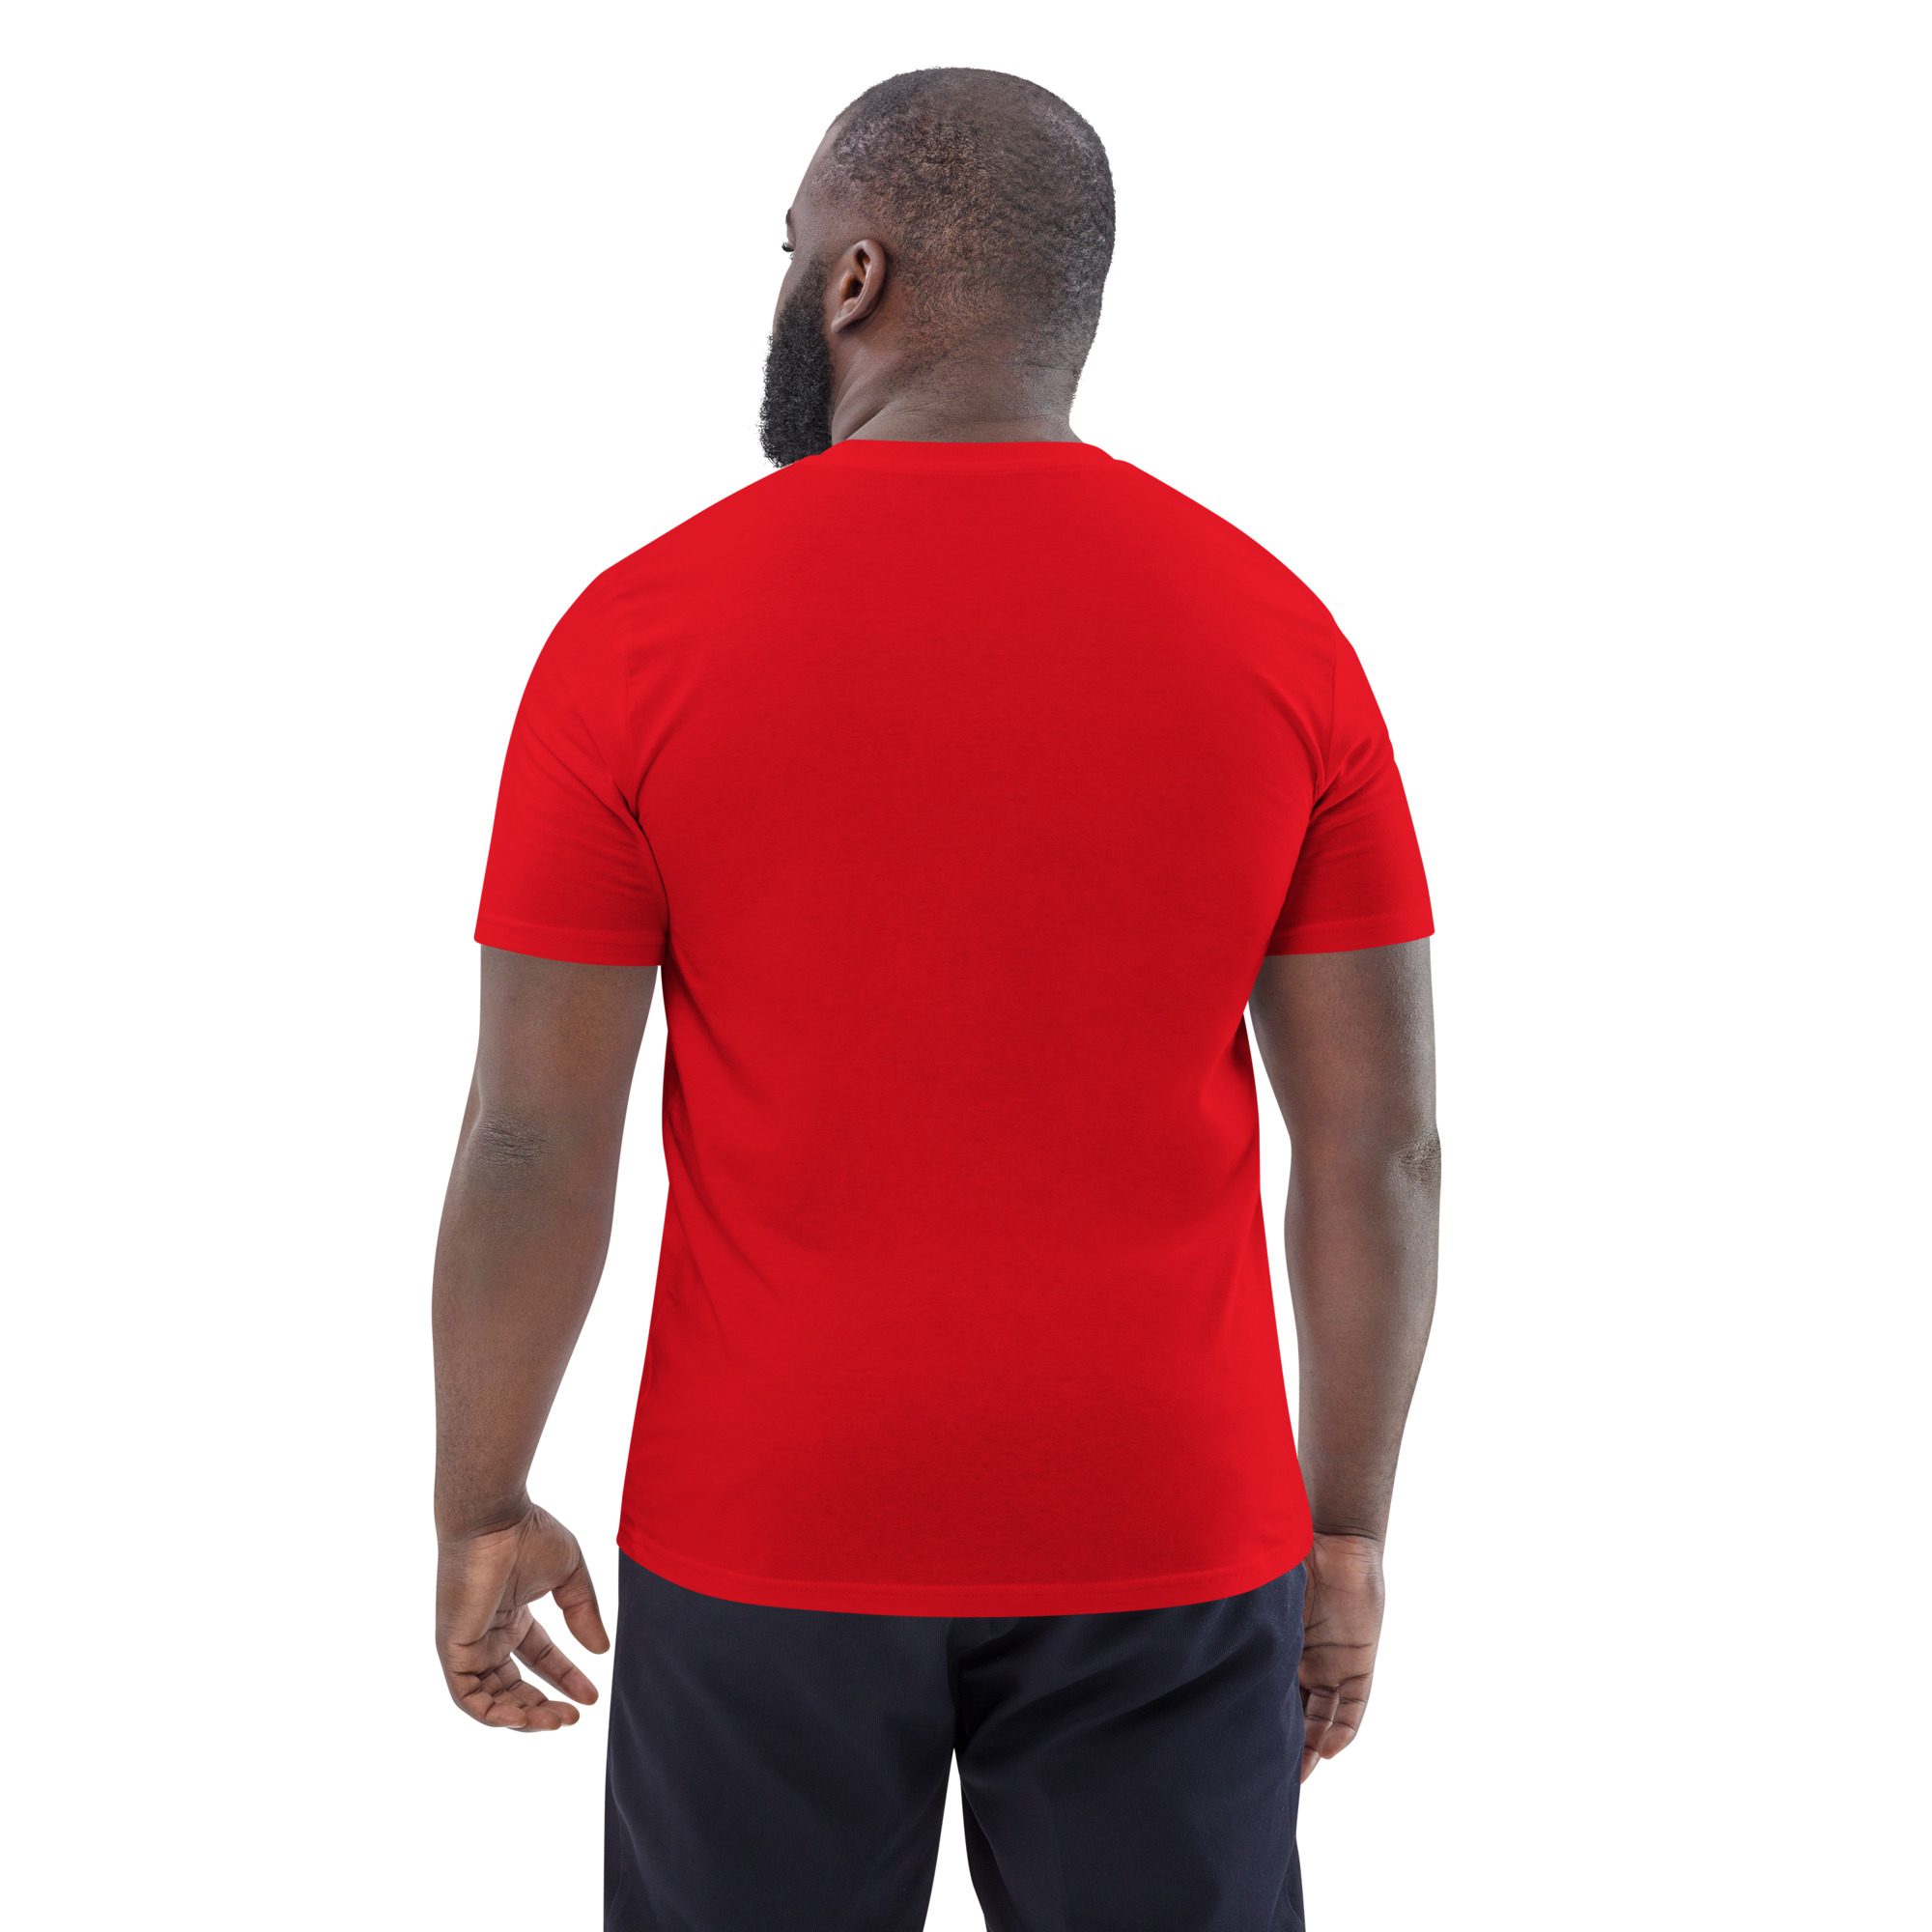 unisex organic cotton t shirt red back 651ada938b75a